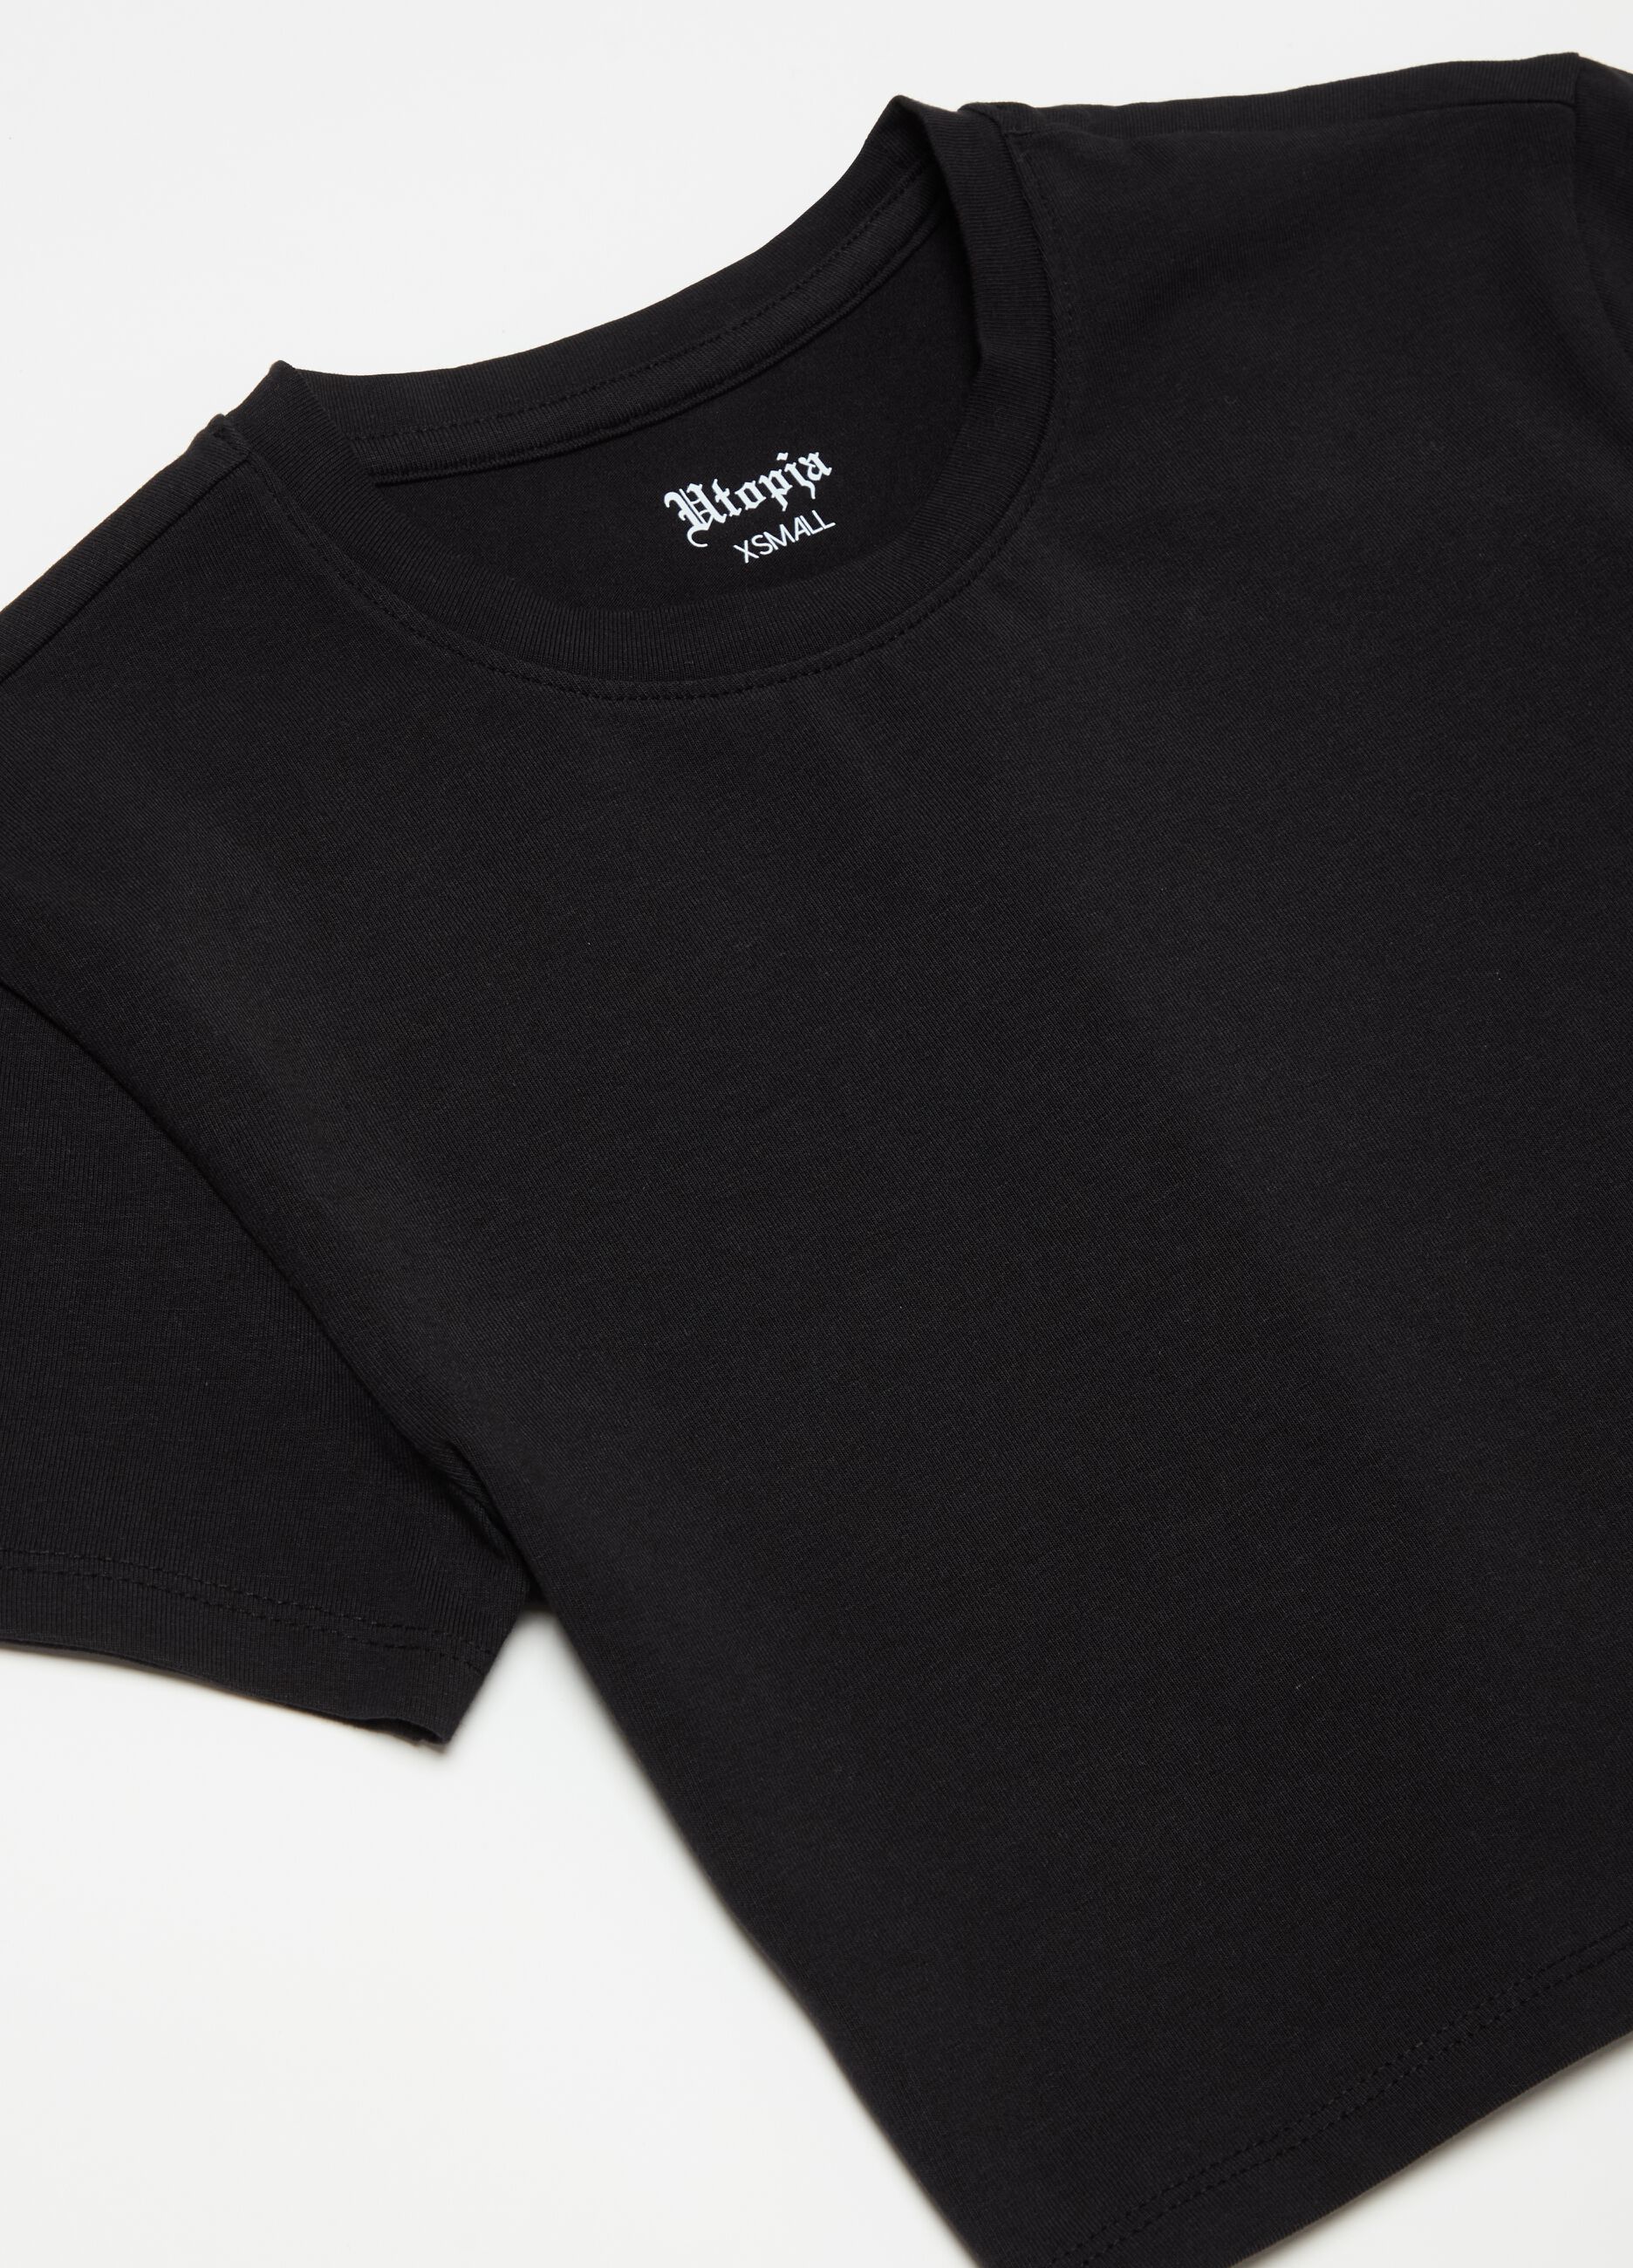 T-shirt Crop Black